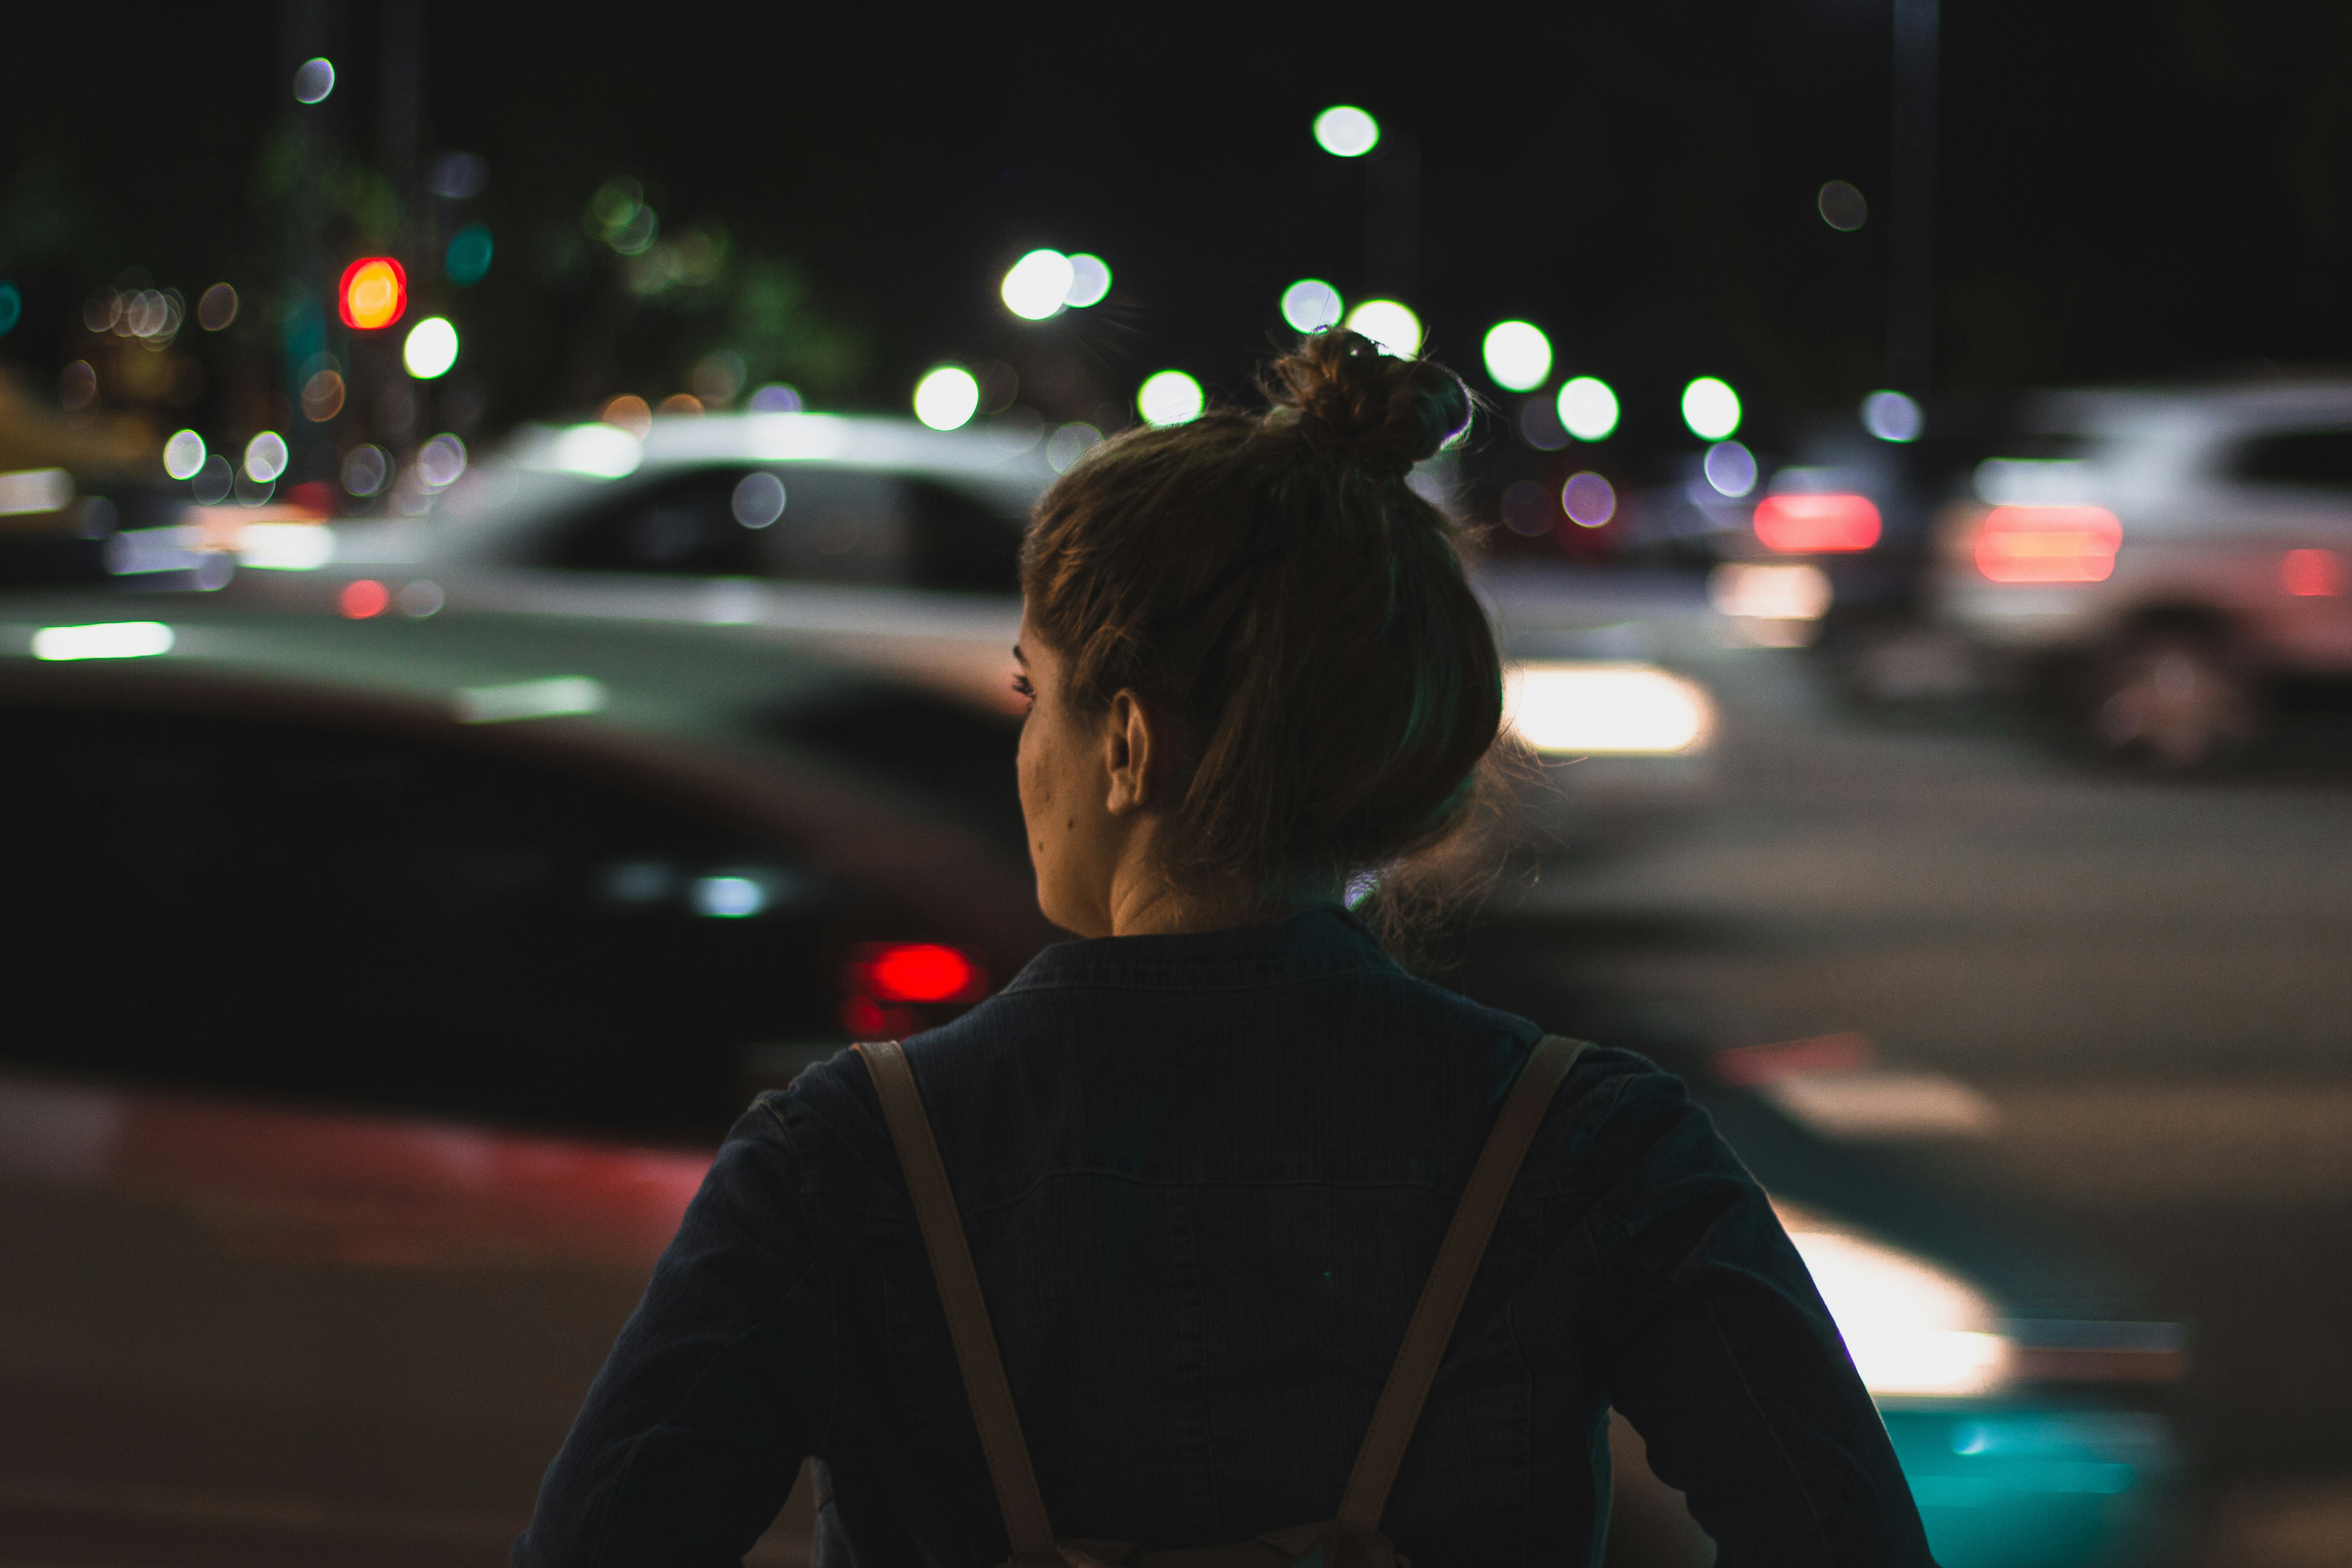 Woman in night street | Source: Unsplash